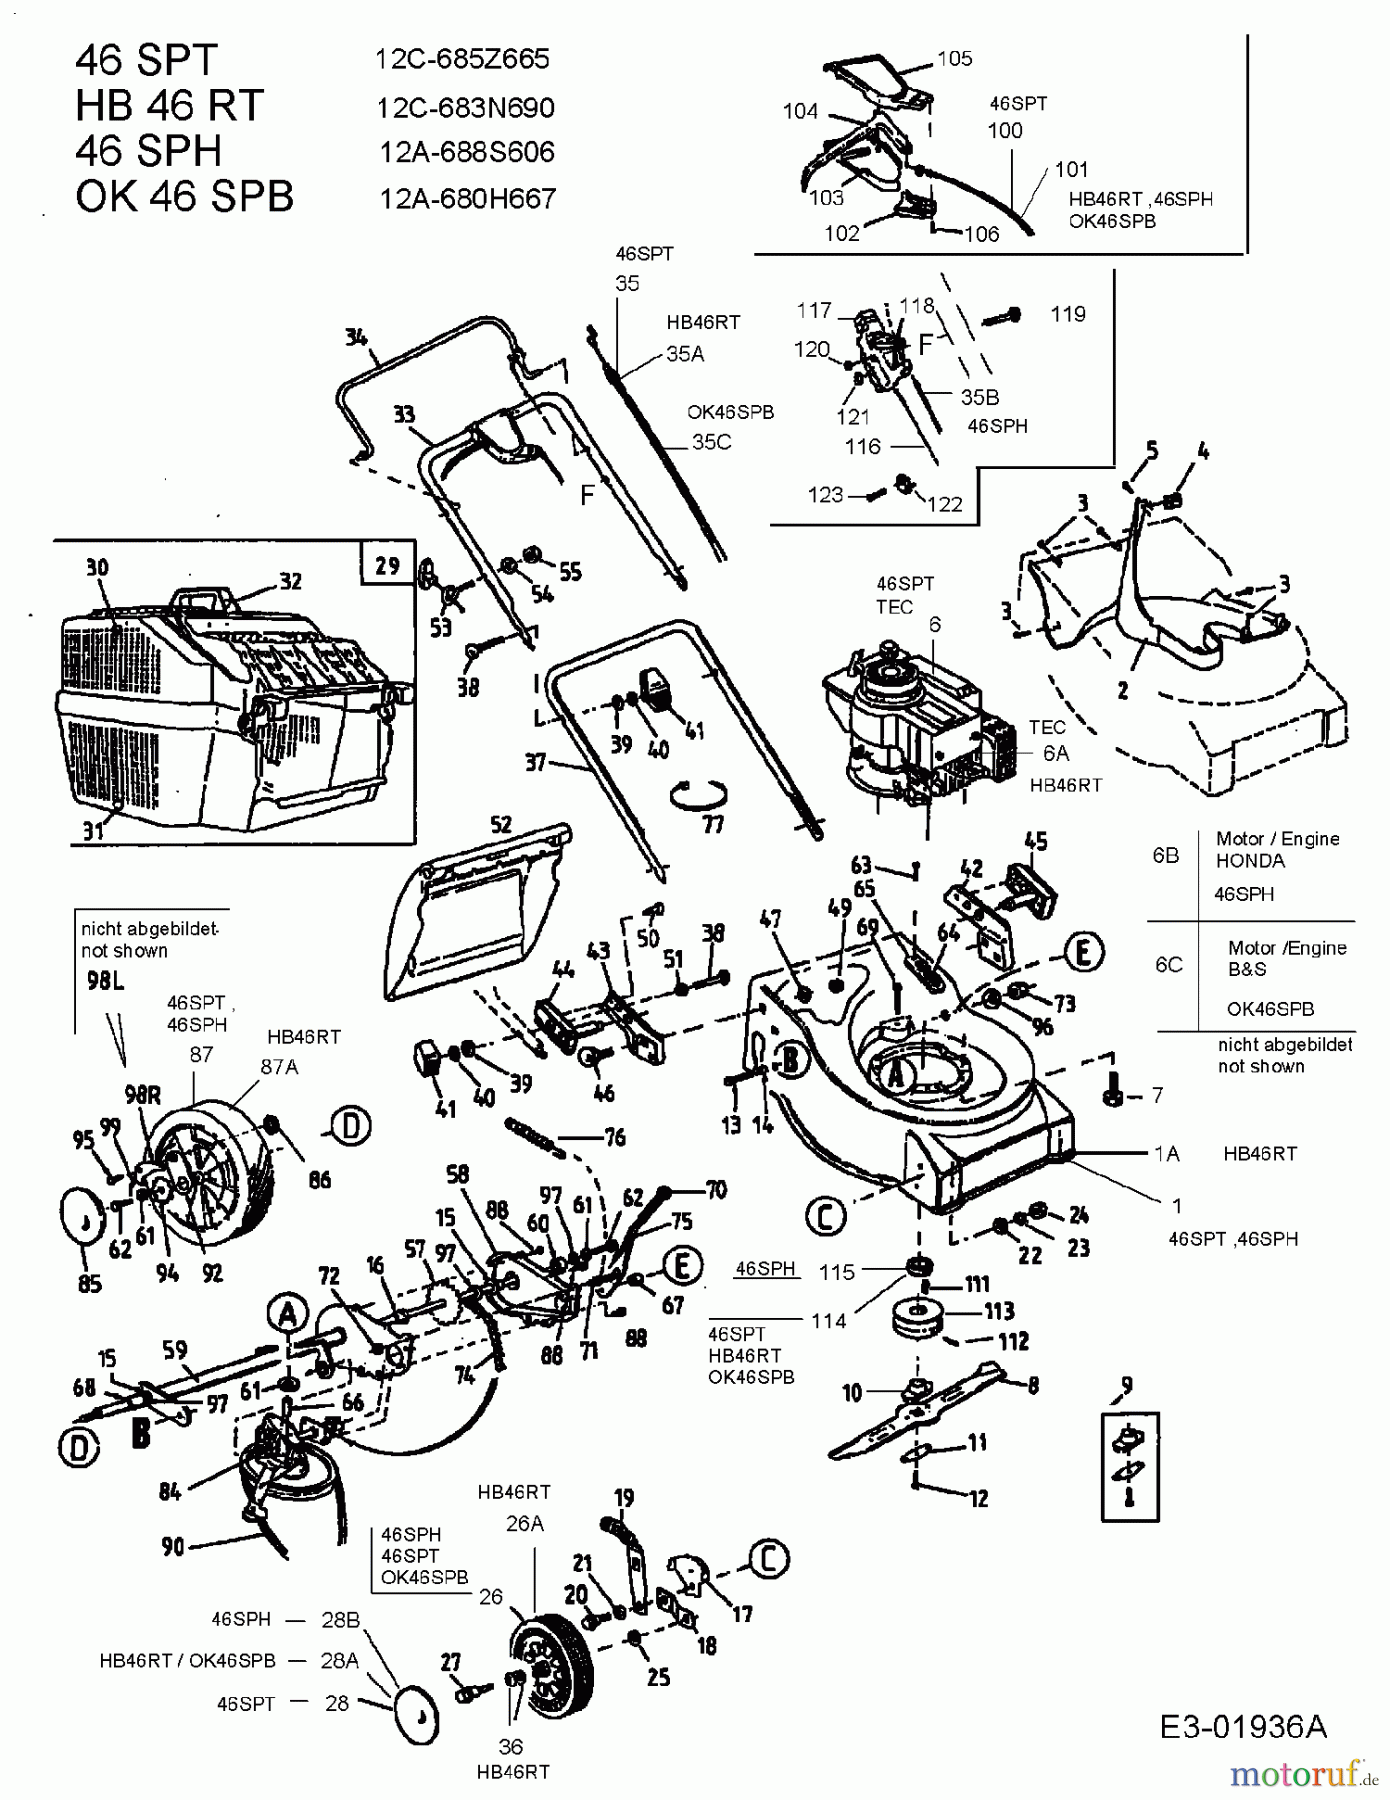  Gutbrod Motormäher mit Antrieb HB 46 RT 12C-683N690  (2004) Grundgerät